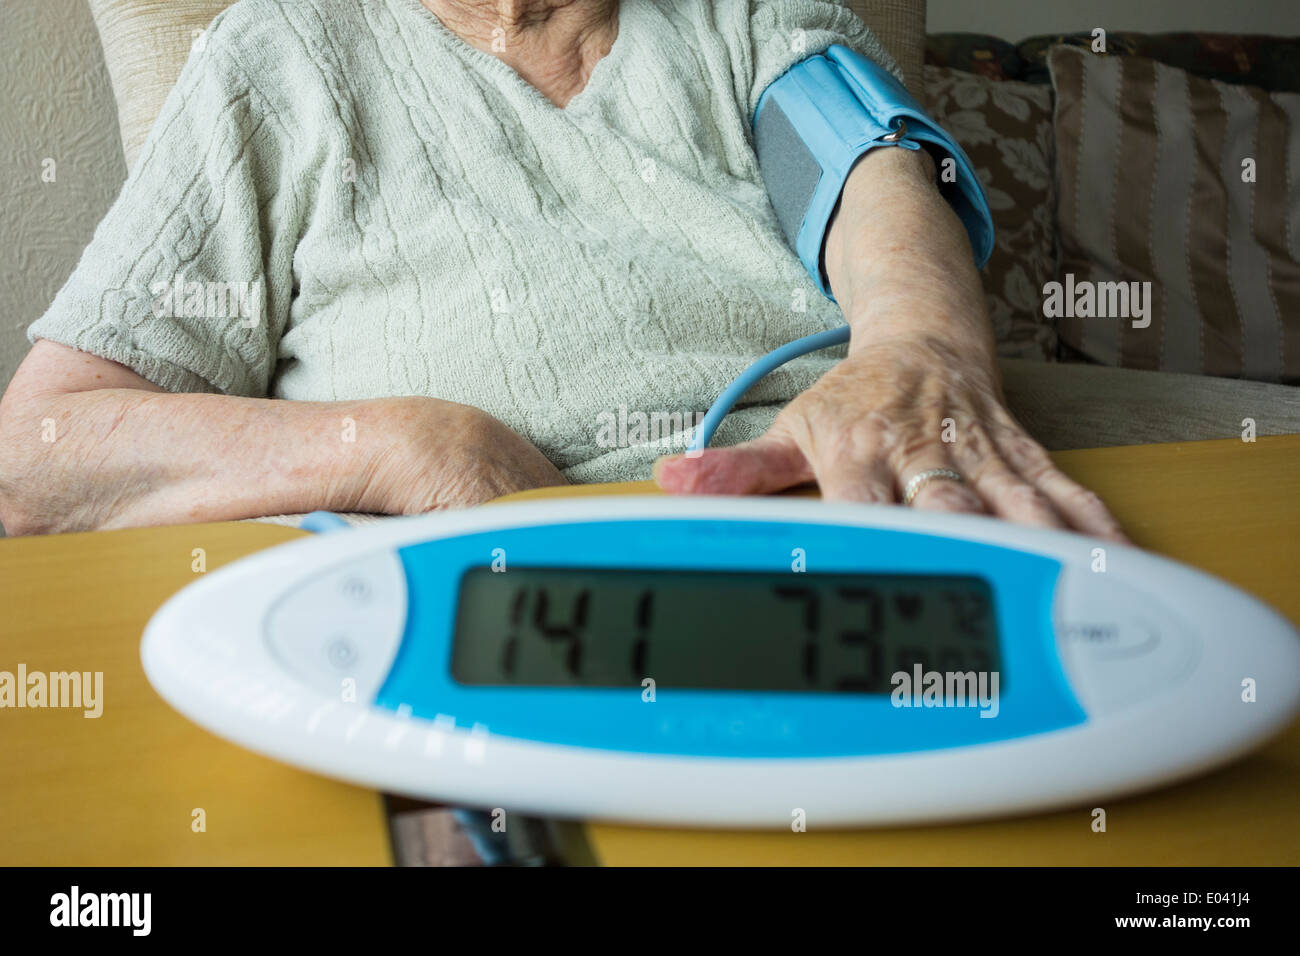 Elderly lady in her nineties having Blood Pressure ckecked at home Stock Photo